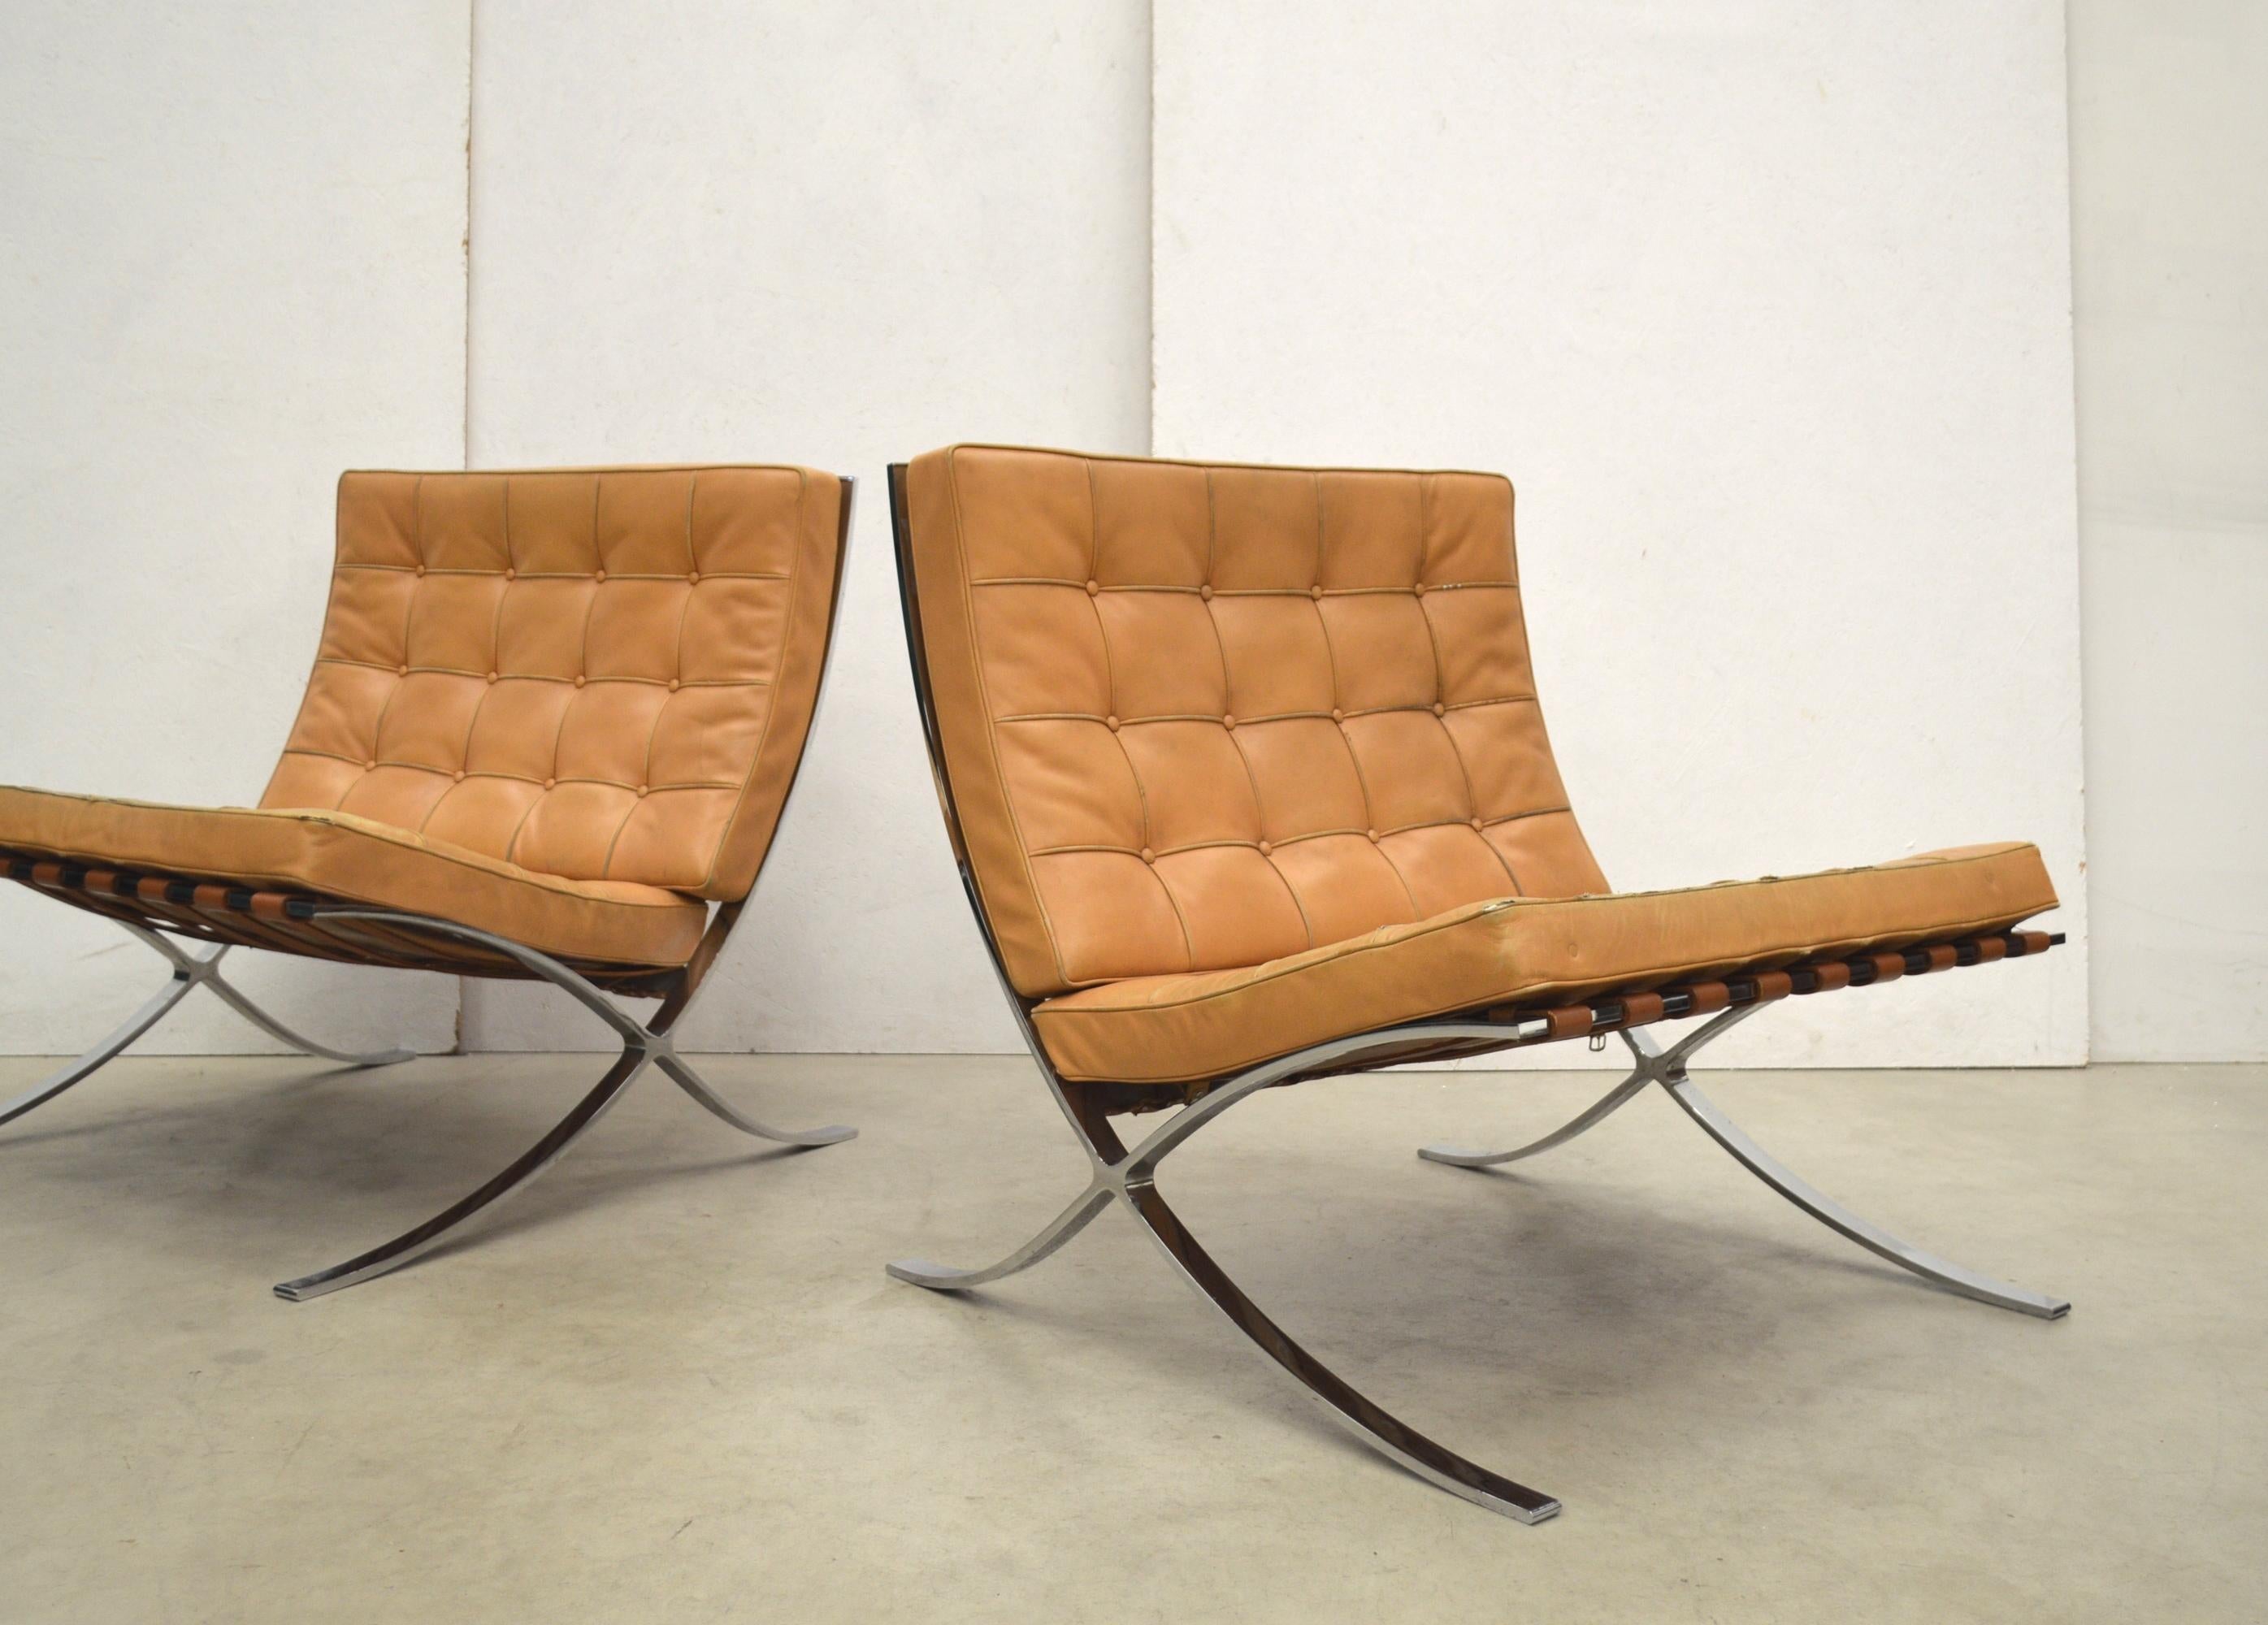 Bauhaus Pair Vintage Cognac Barcelona Chair by Mies van der Rohe Knoll 1970s